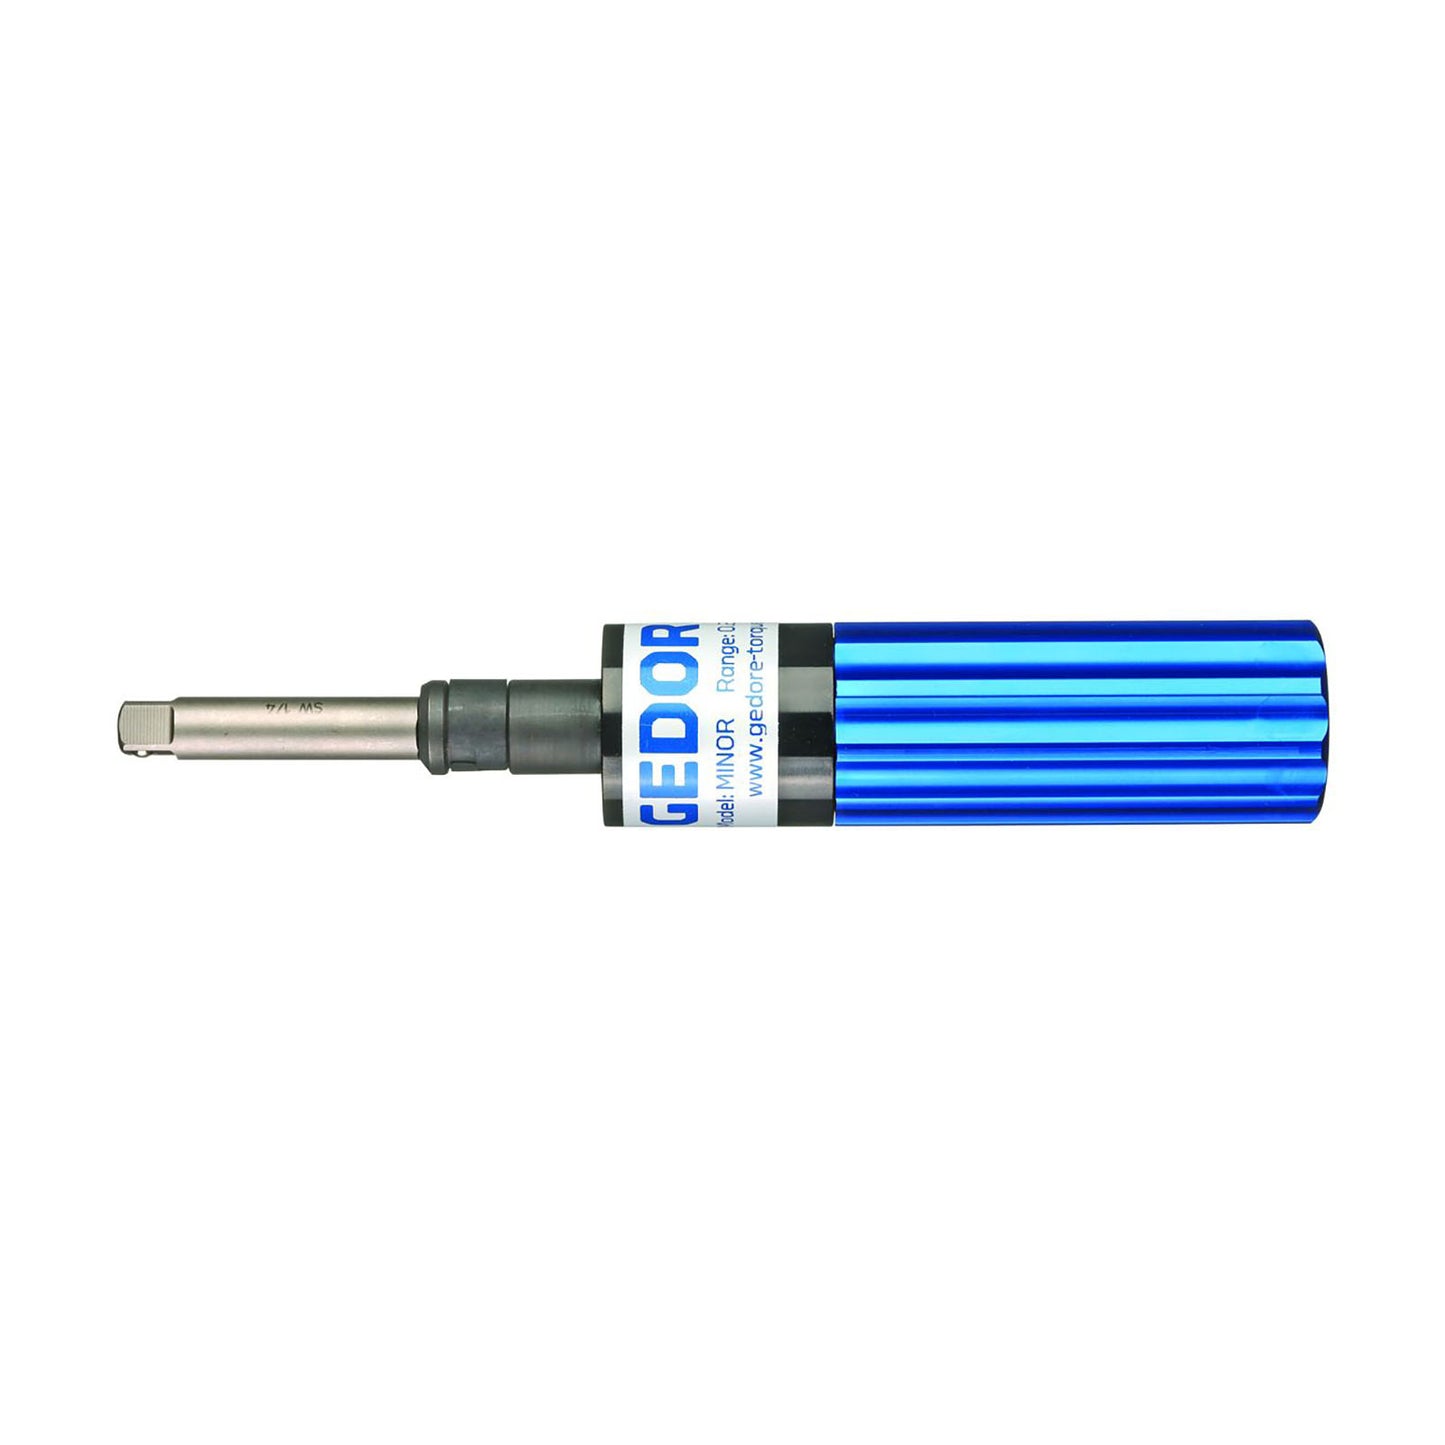 GEDORE TLS 1360 FH G - Dynamometric screwdriver 1/4" 2.5-13.6 Nm 015860 green (2345226)